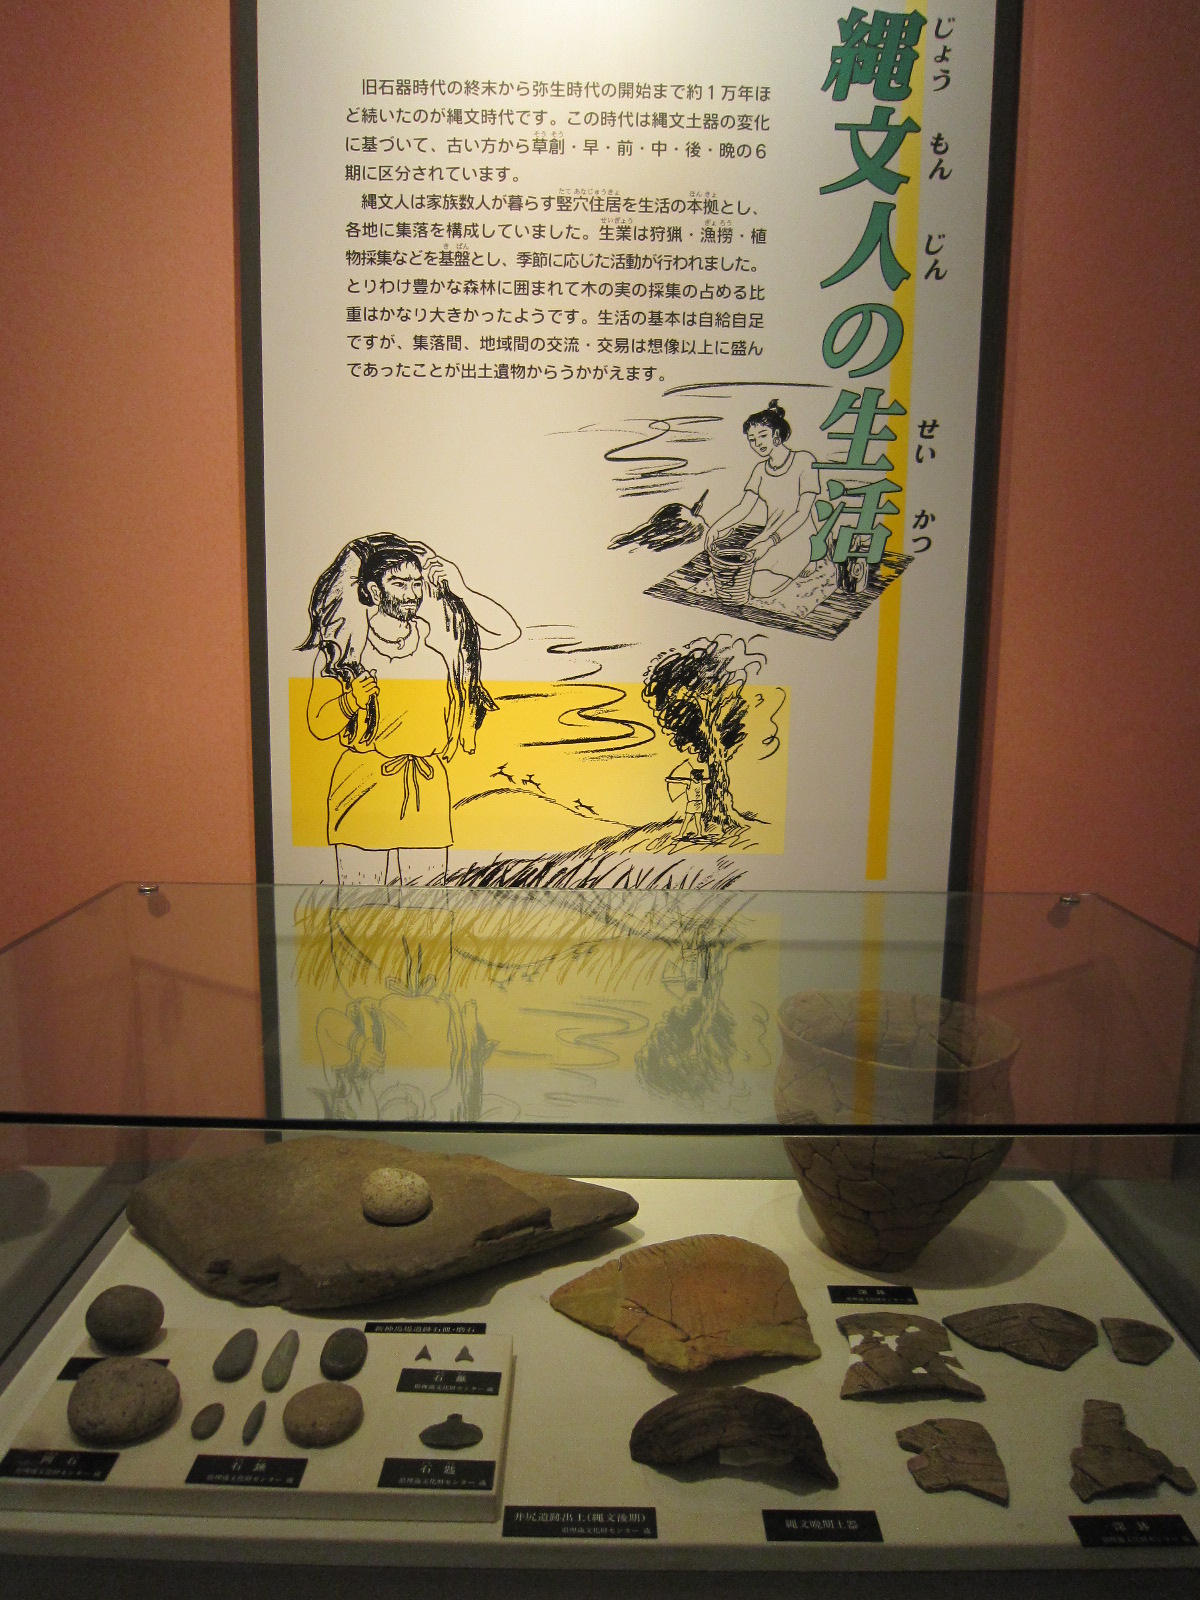 縄文遺跡出土品の展示